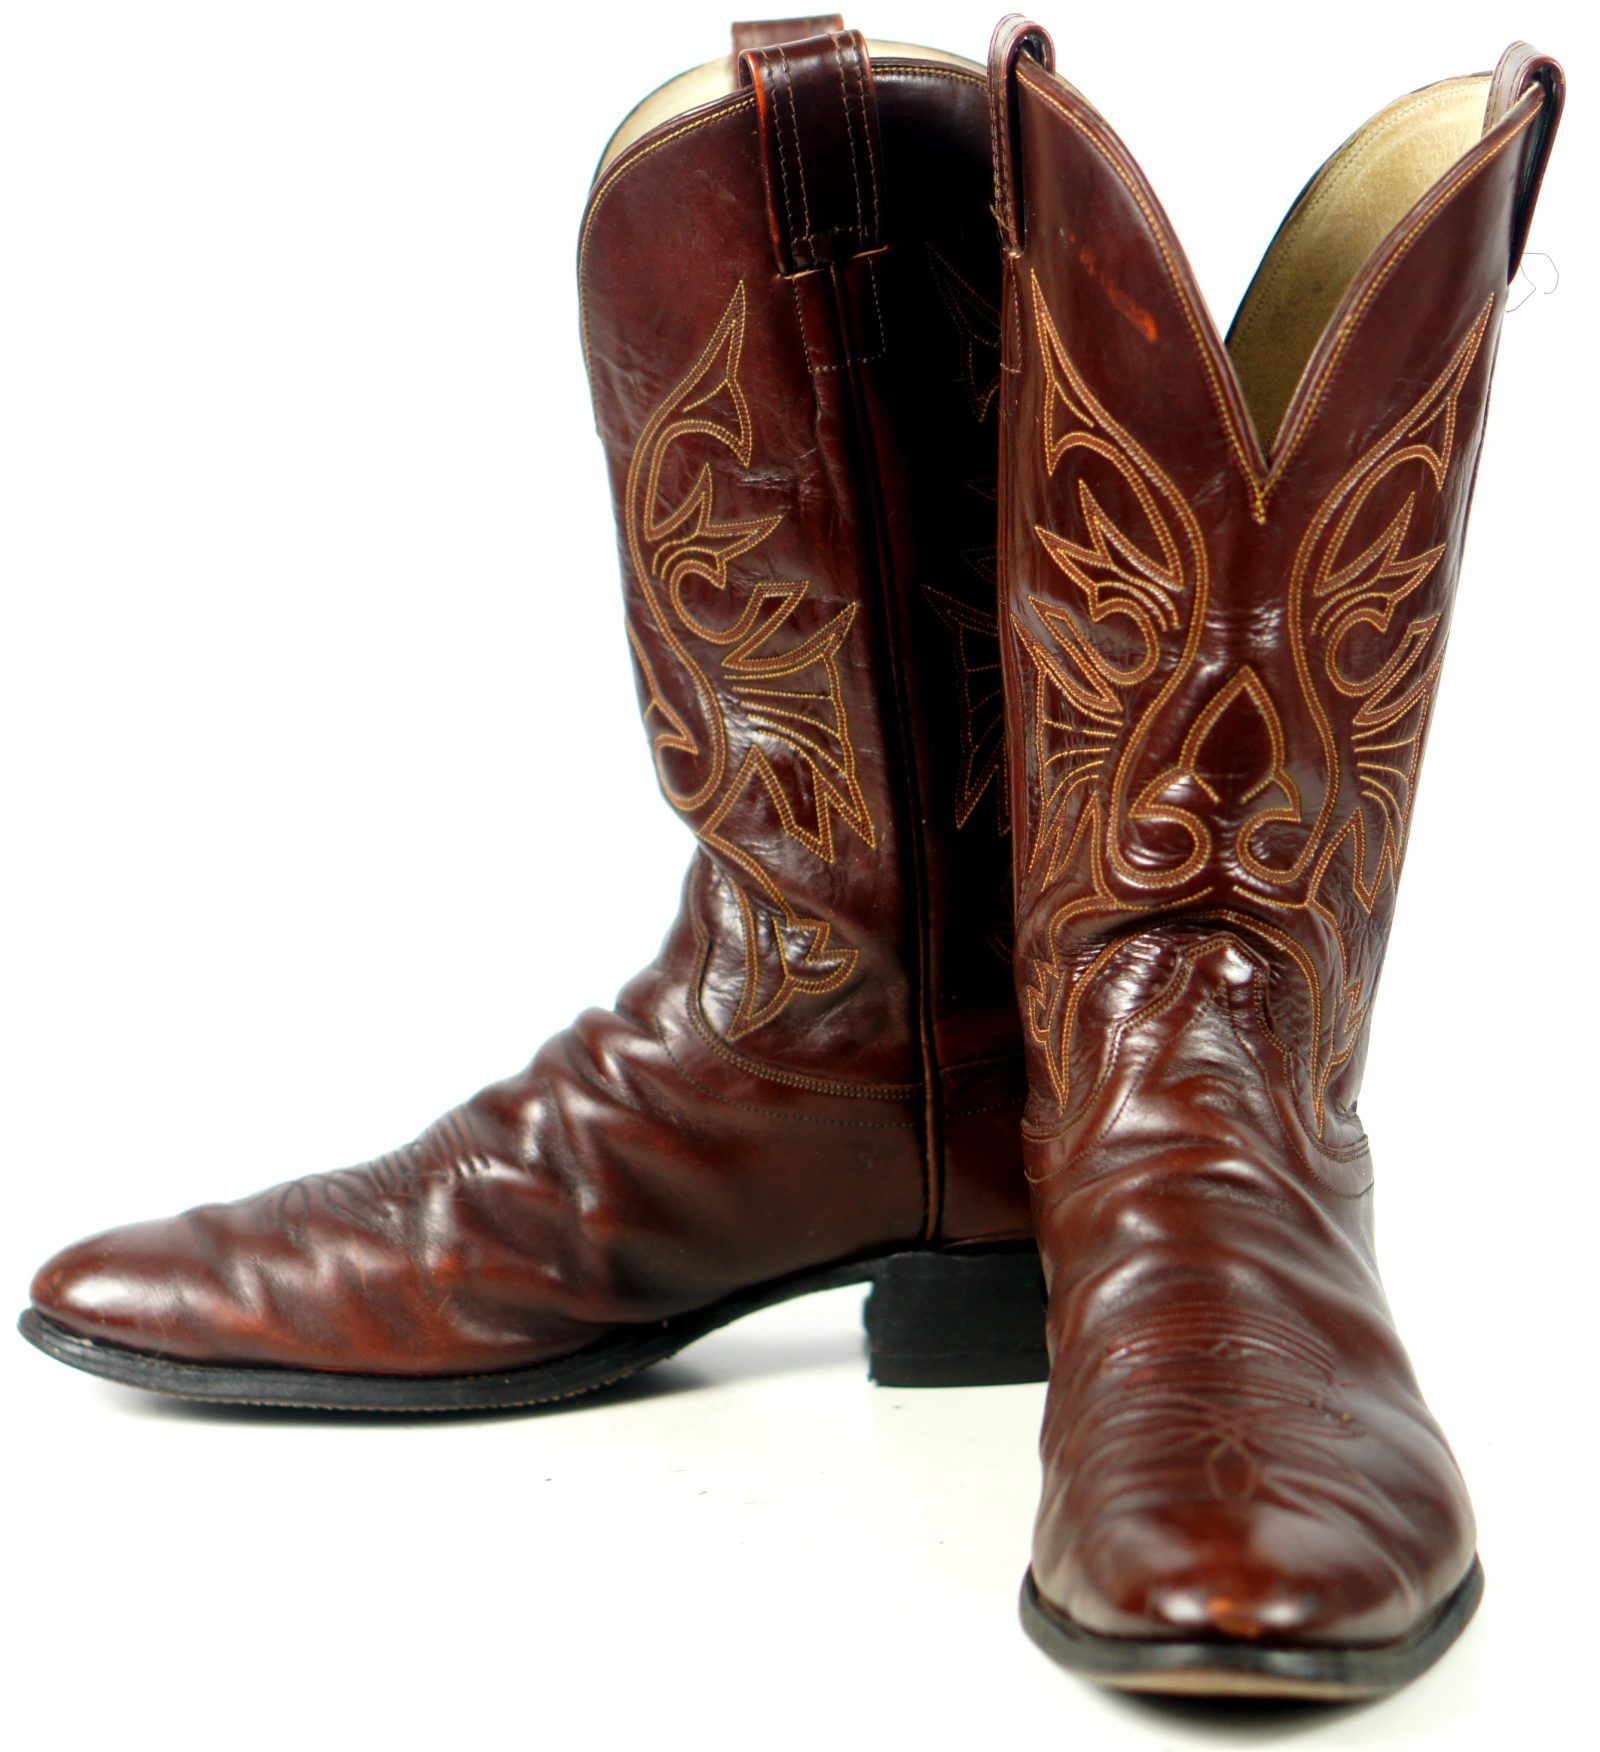 Olathe Cowboy Western Boots Brown Leather Deep Vees Vintage US Made Men